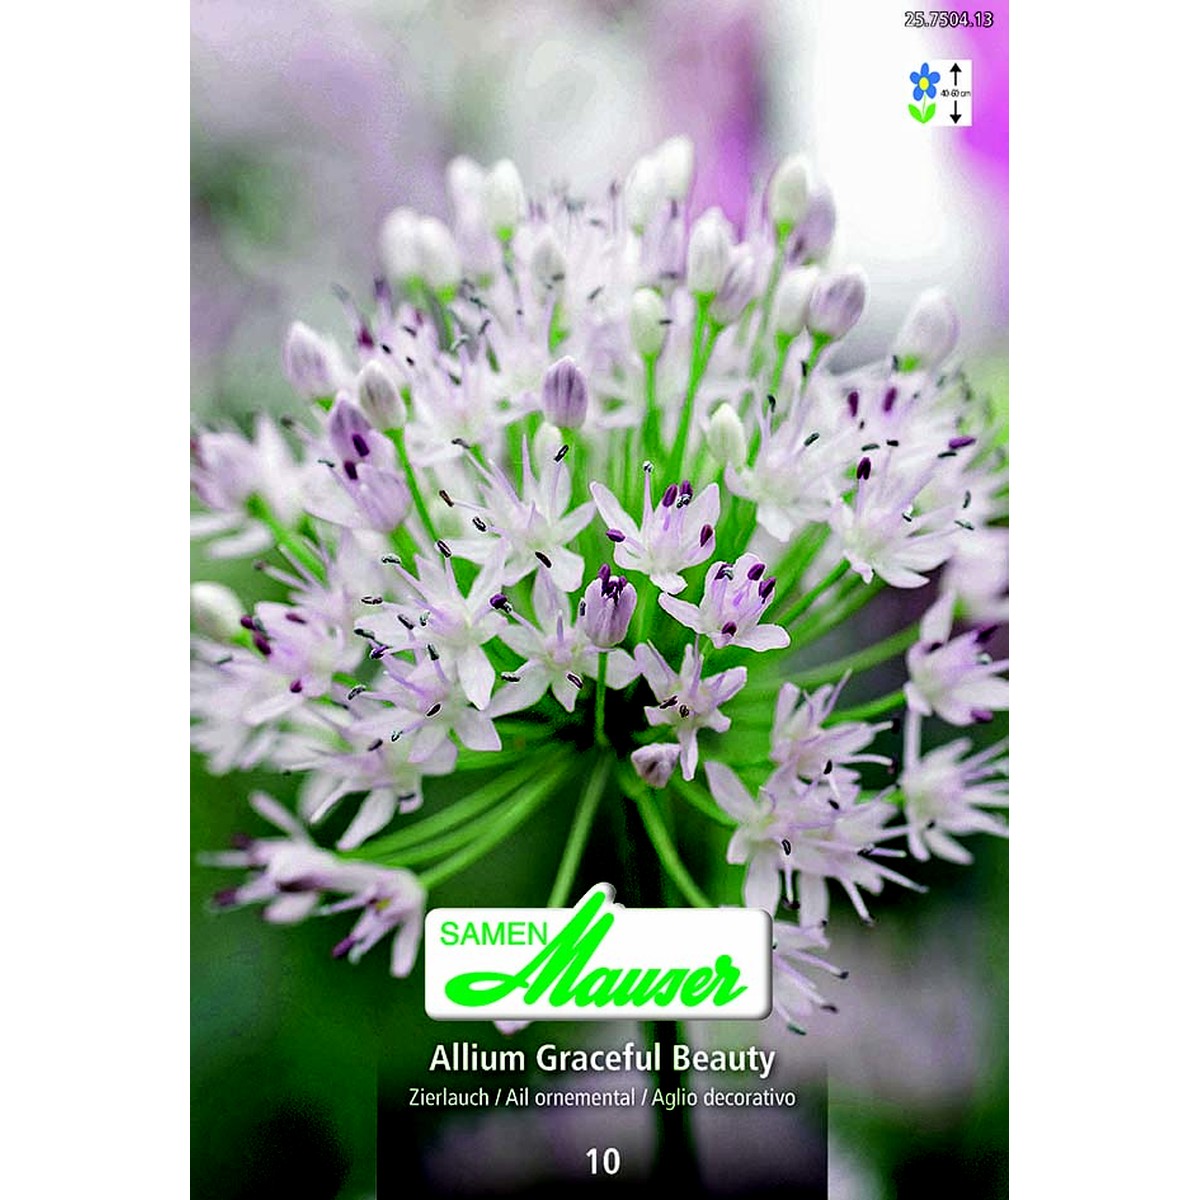   Allium ampl Graceful Beauty 10  6/